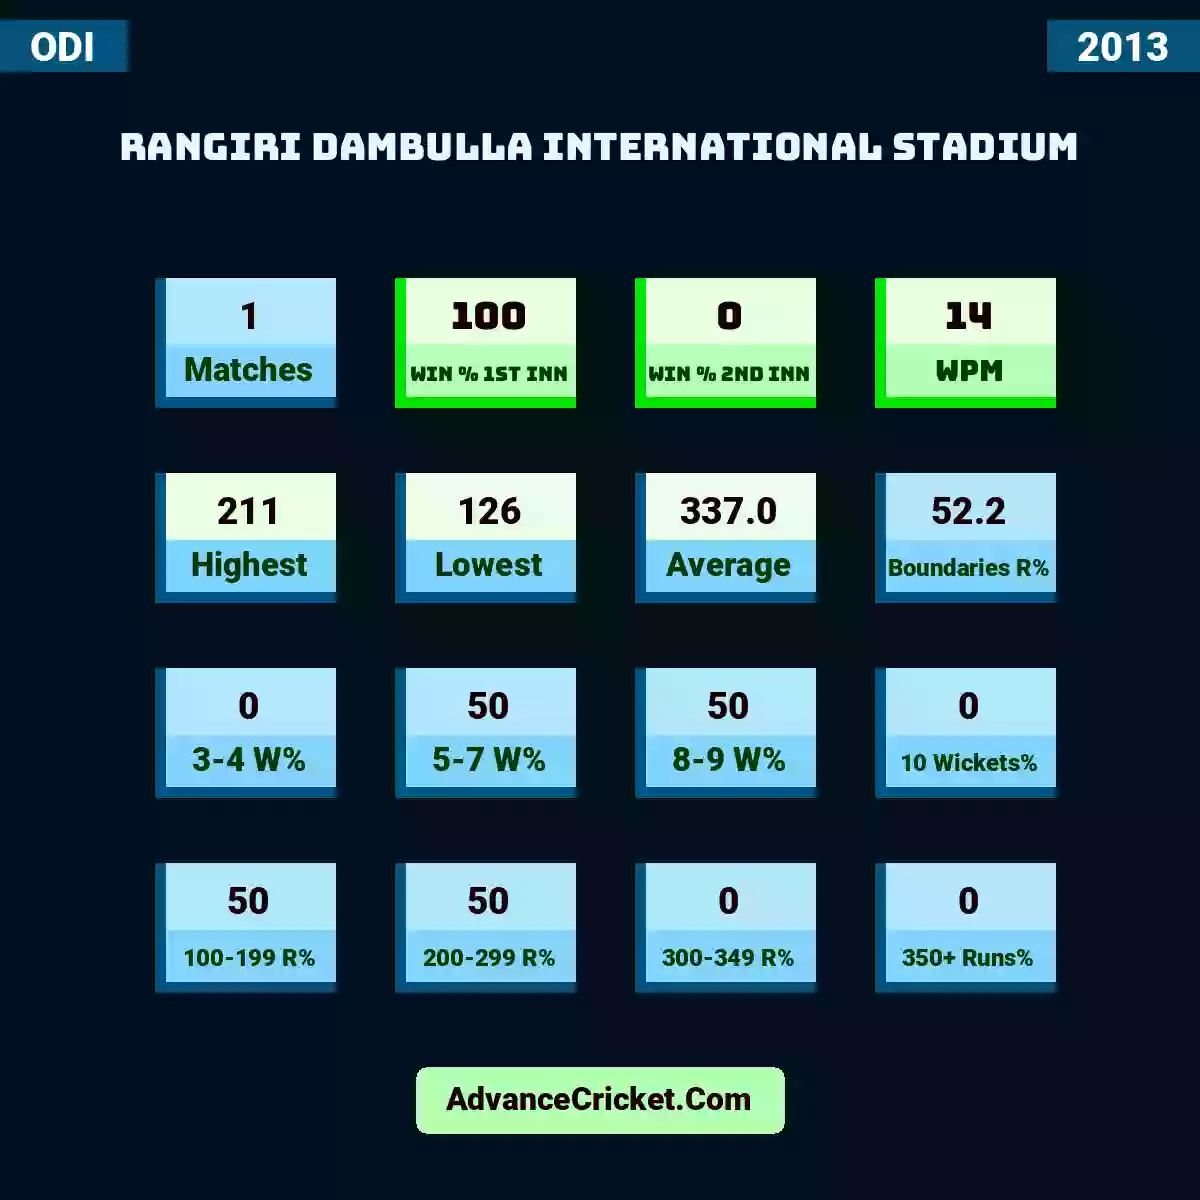 Image showing Rangiri Dambulla International Stadium with Matches: 1, Win % 1st Inn: 100, Win % 2nd Inn: 0, WPM: 14, Highest: 211, Lowest: 126, Average: 337.0, Boundaries R%: 52.2, 3-4 W%: 0, 5-7 W%: 50, 8-9 W%: 50, 10 Wickets%: 0, 100-199 R%: 50, 200-299 R%: 50, 300-349 R%: 0, 350+ Runs%: 0.